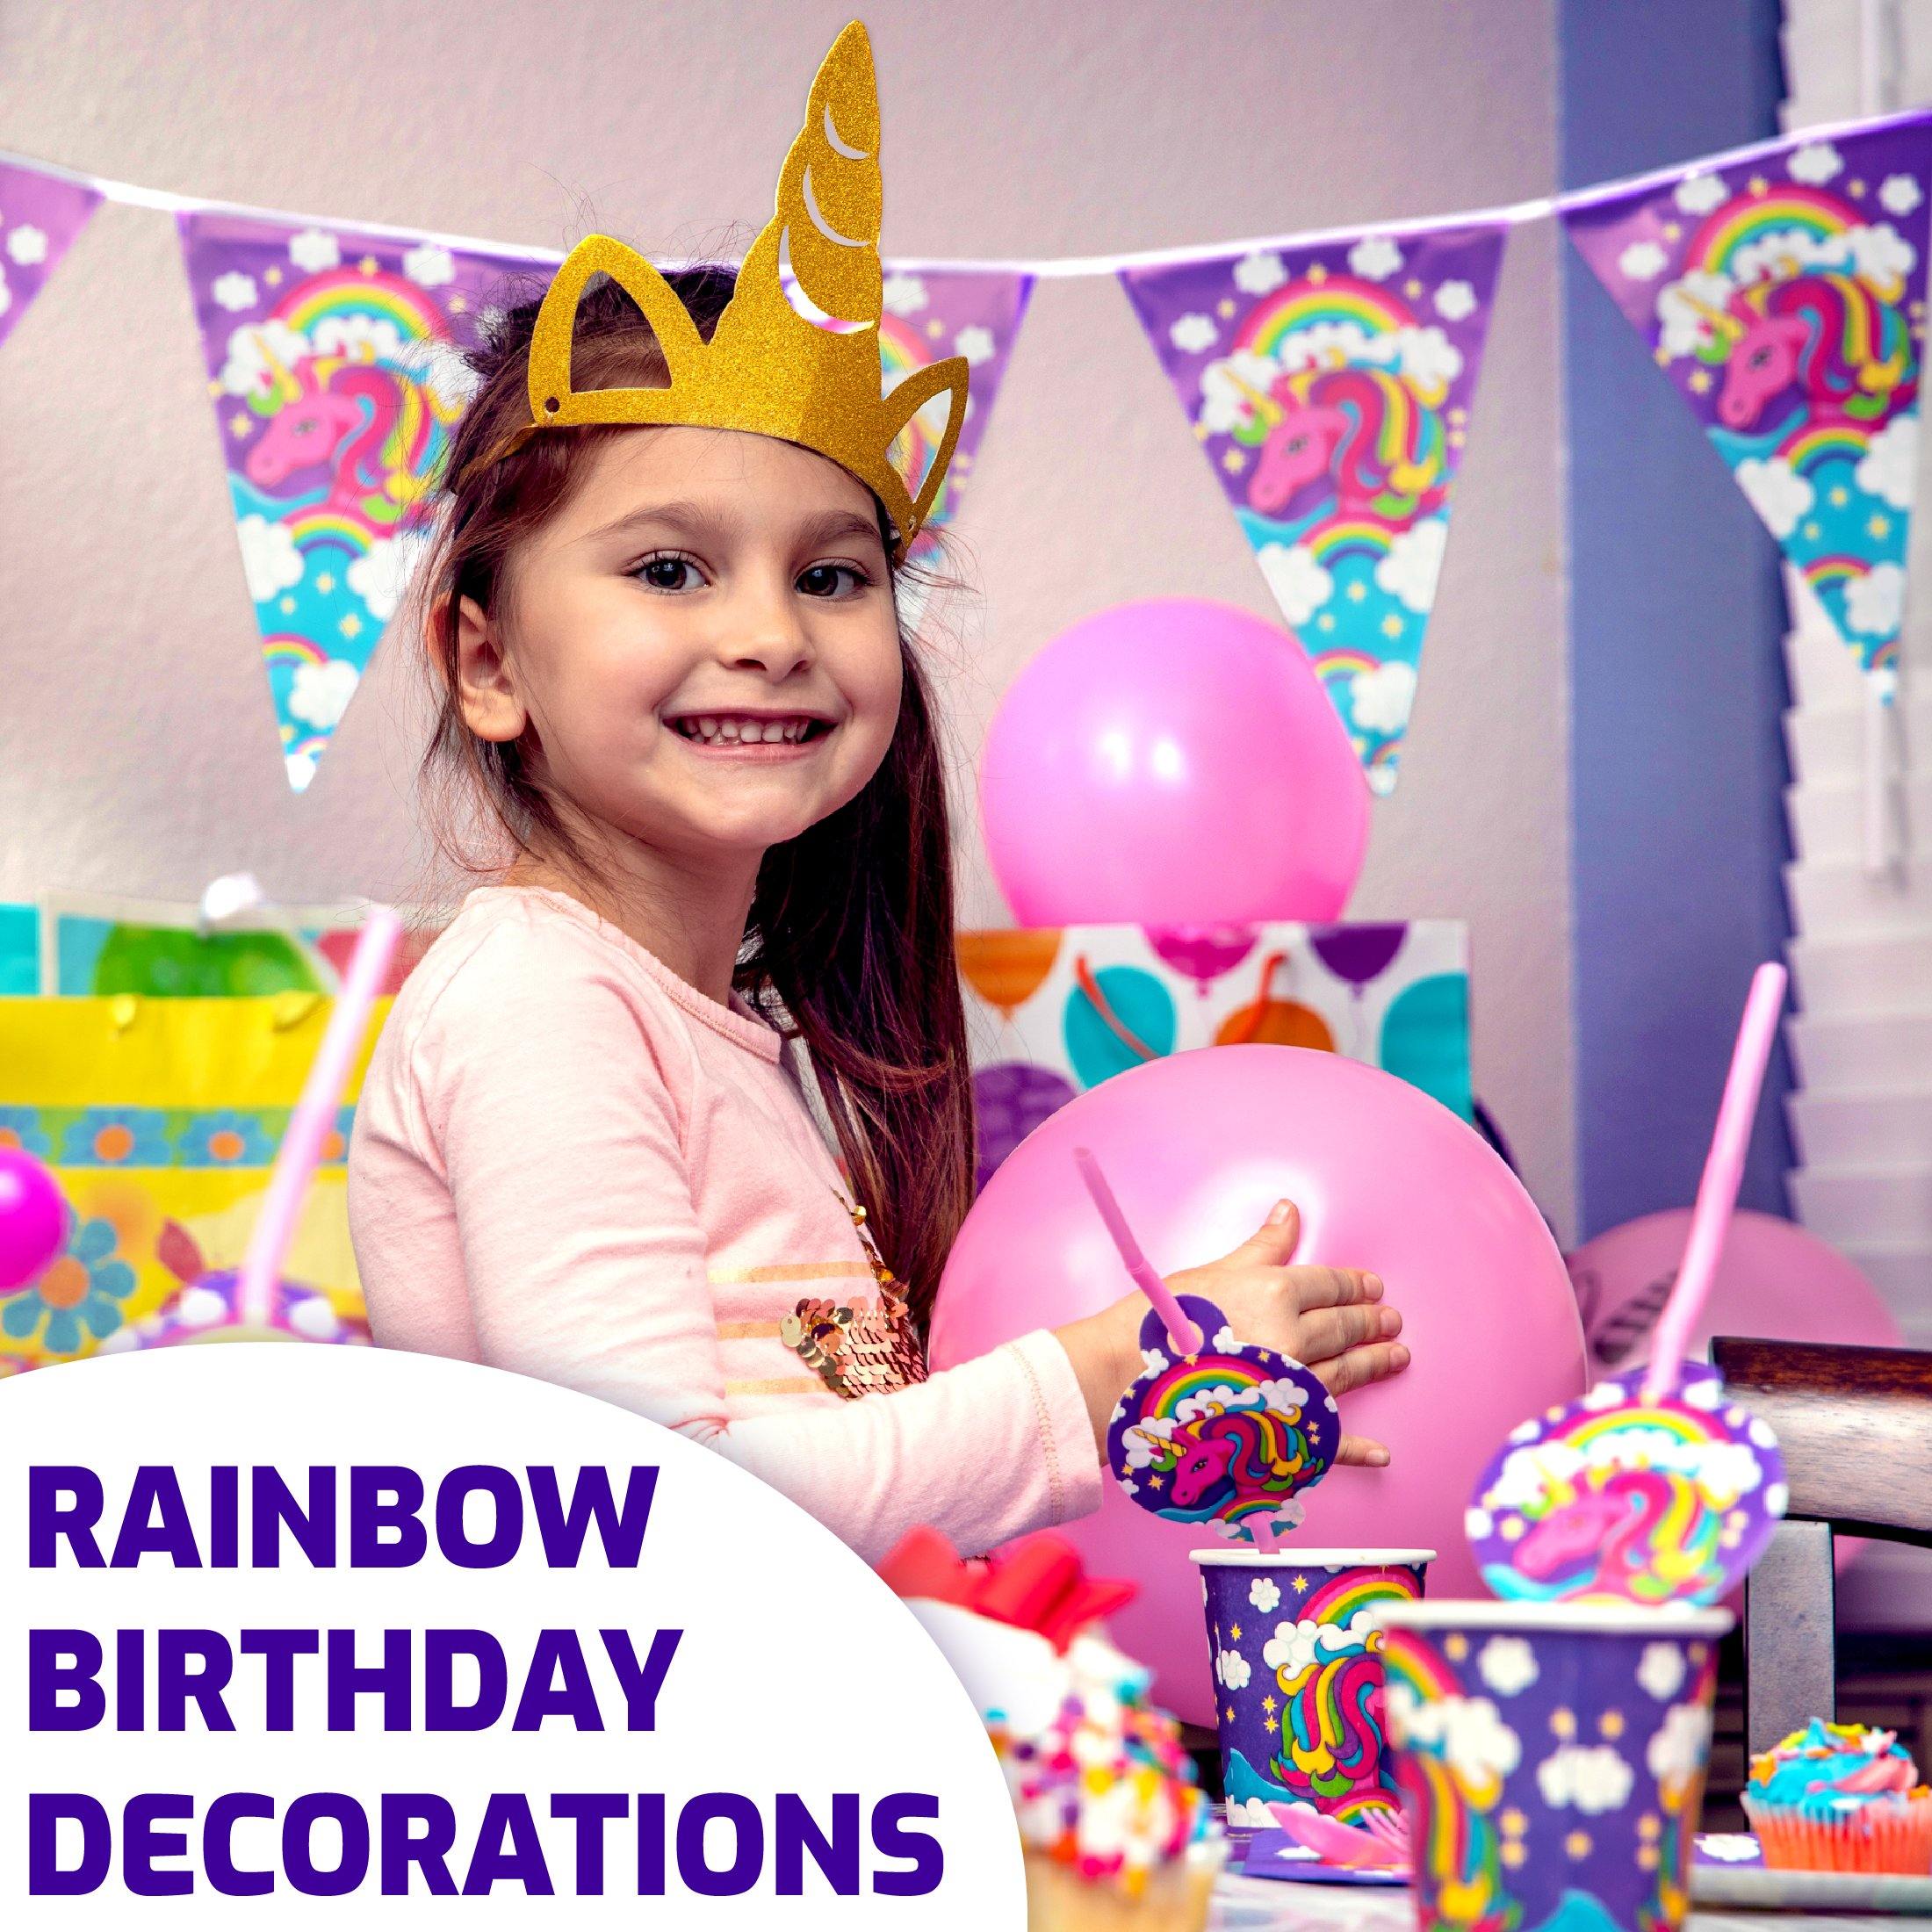 Unicorn Party Supplies Set - Rainbow Unicorn Party Decorations for Gir –  WERNNSAI